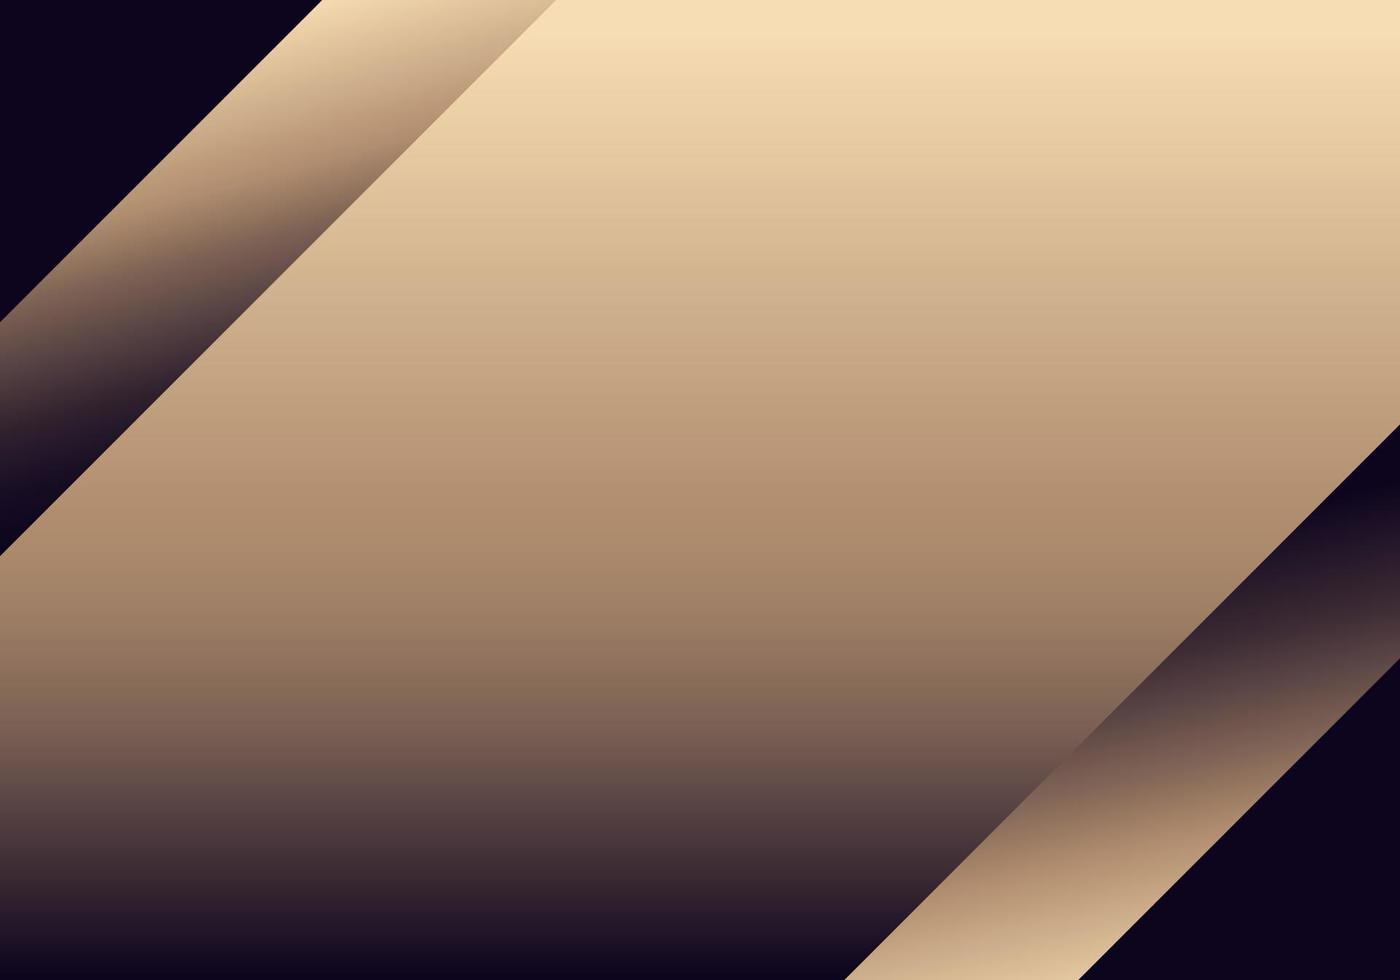 abstracto elegante mínimo raya dorada diagonal sobre fondo oscuro estilo de lujo vector